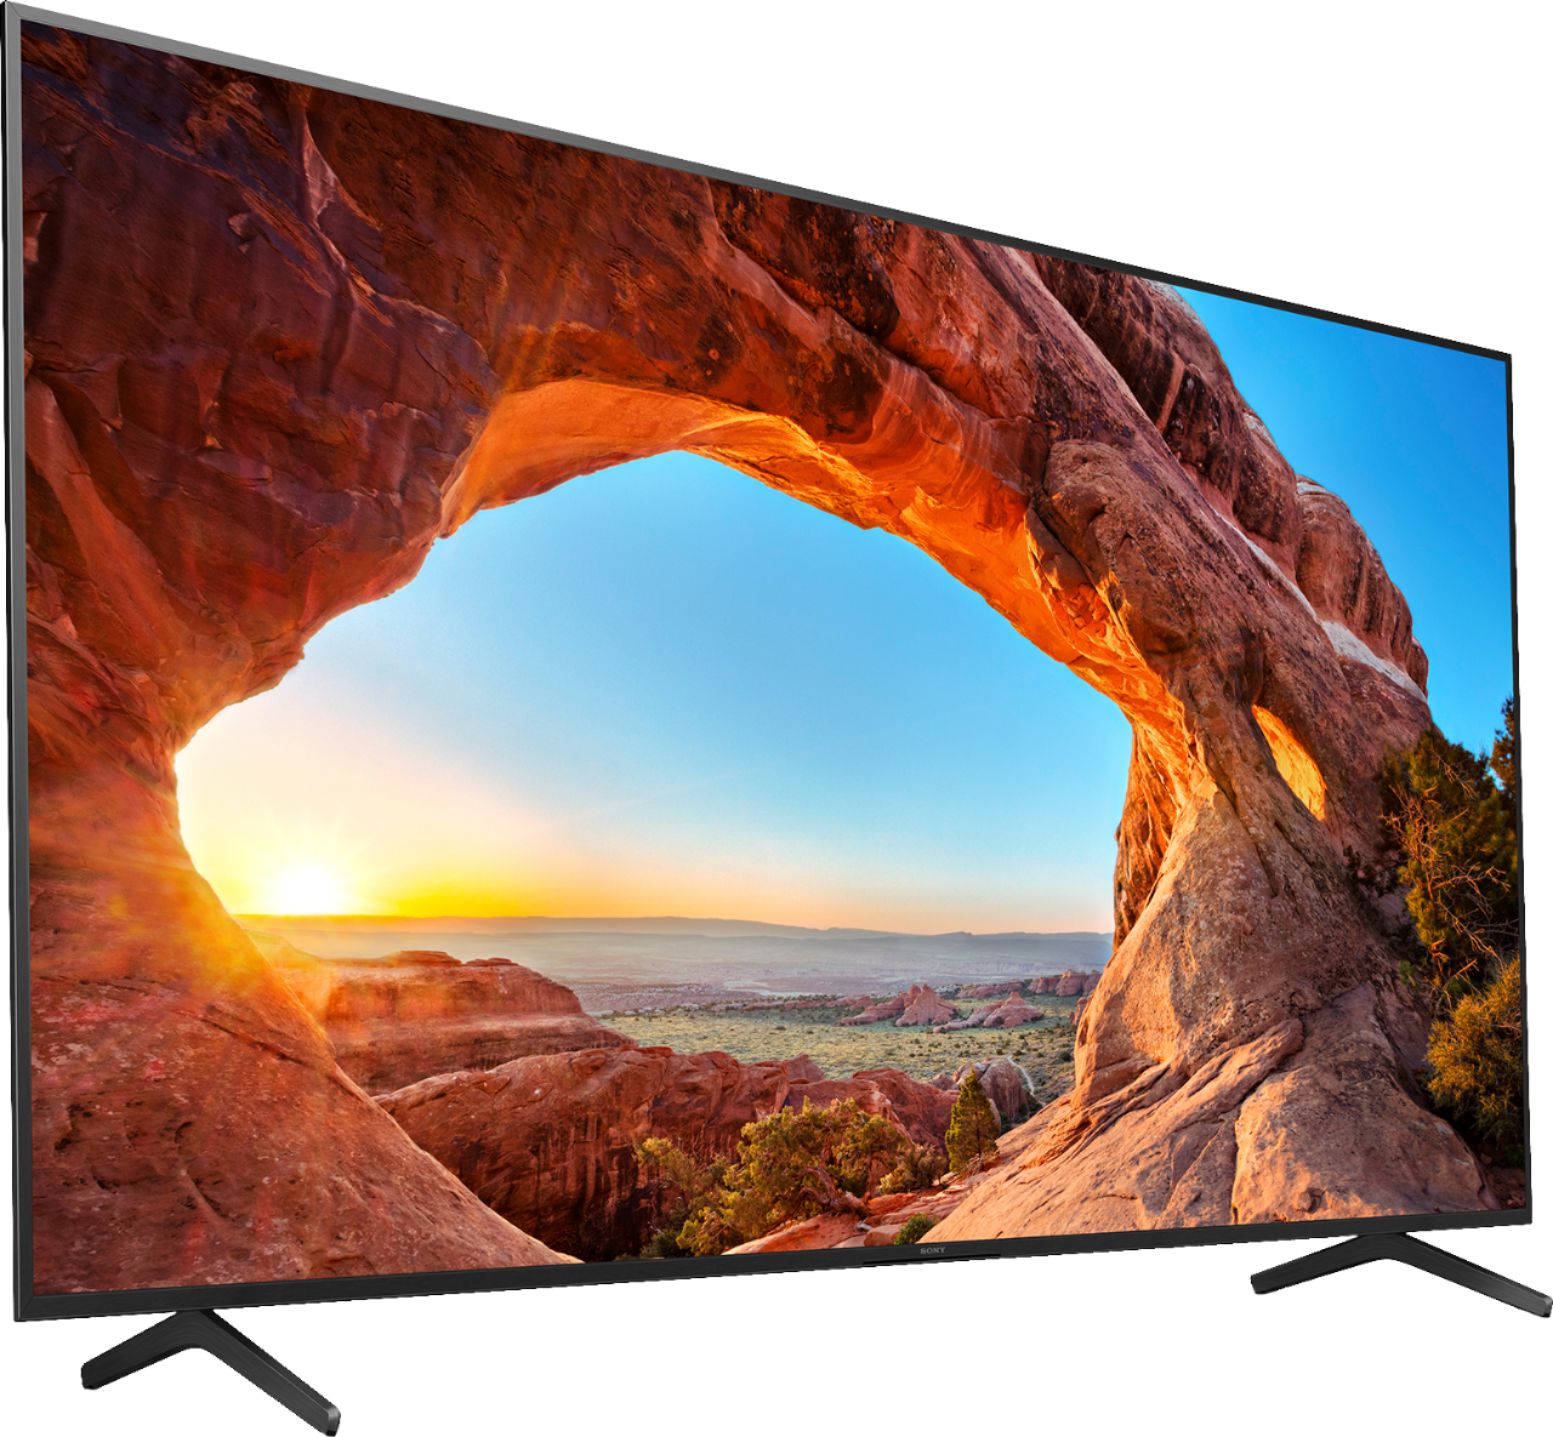 Angle View: Sony - 85" Class X85J Series LED 4K UHD Smart Google TV